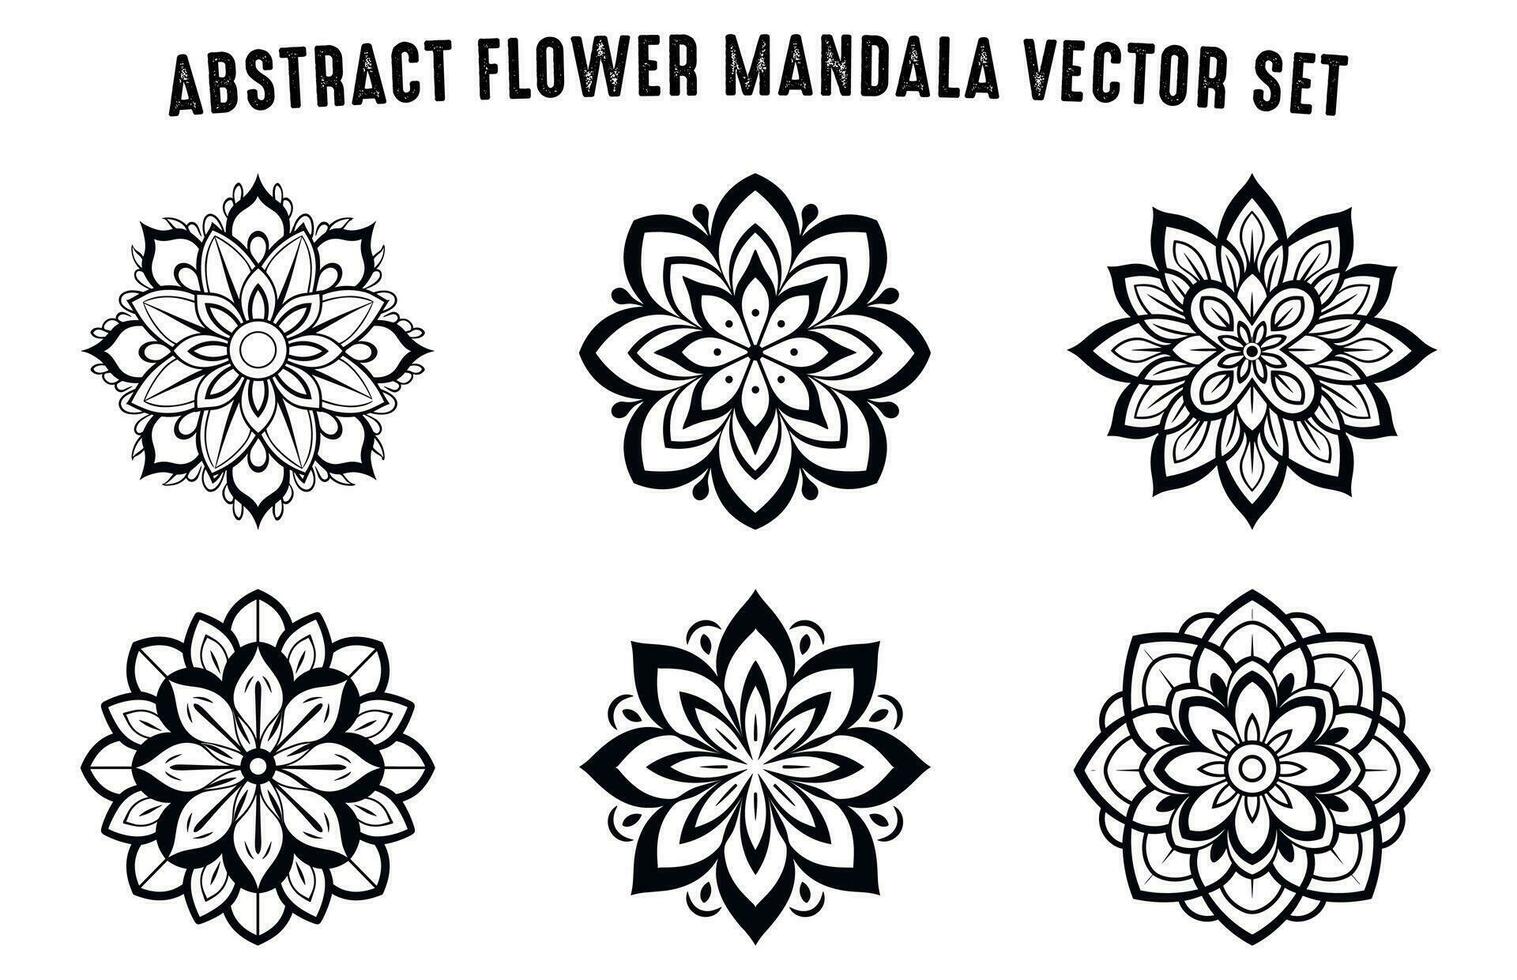 negro y blanco resumen circular modelo mandala vector gratis, mandala línea dibujo diseño, ornamental mandala con floral patrones, ornamental lujo mandala modelo